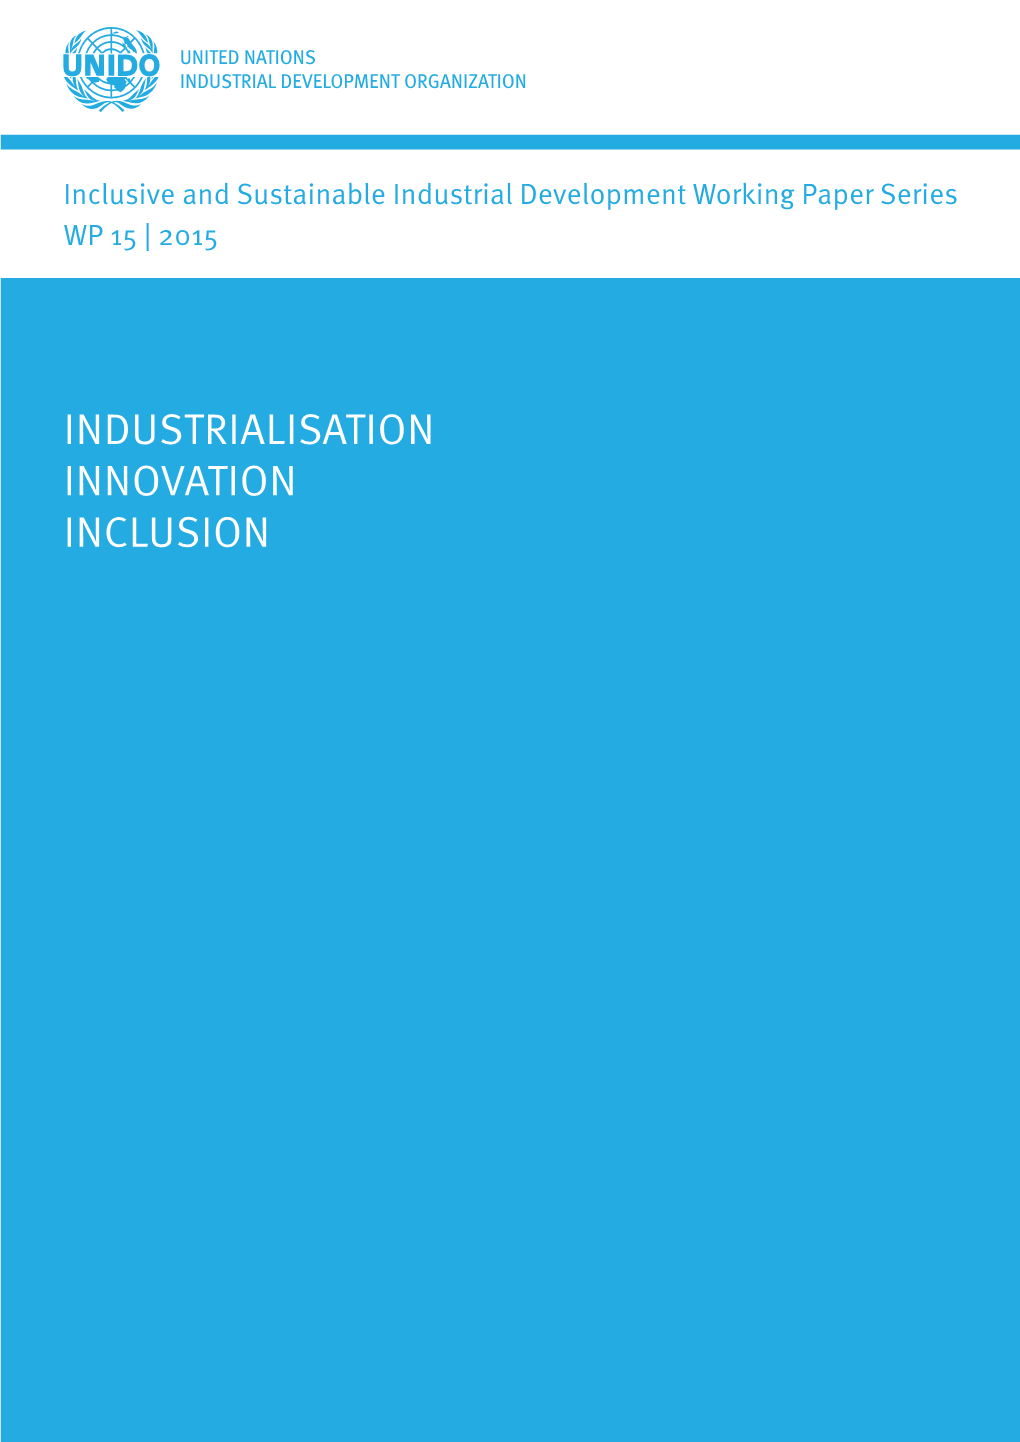 Industrialisation, Innovation, Inclusion.Pdf